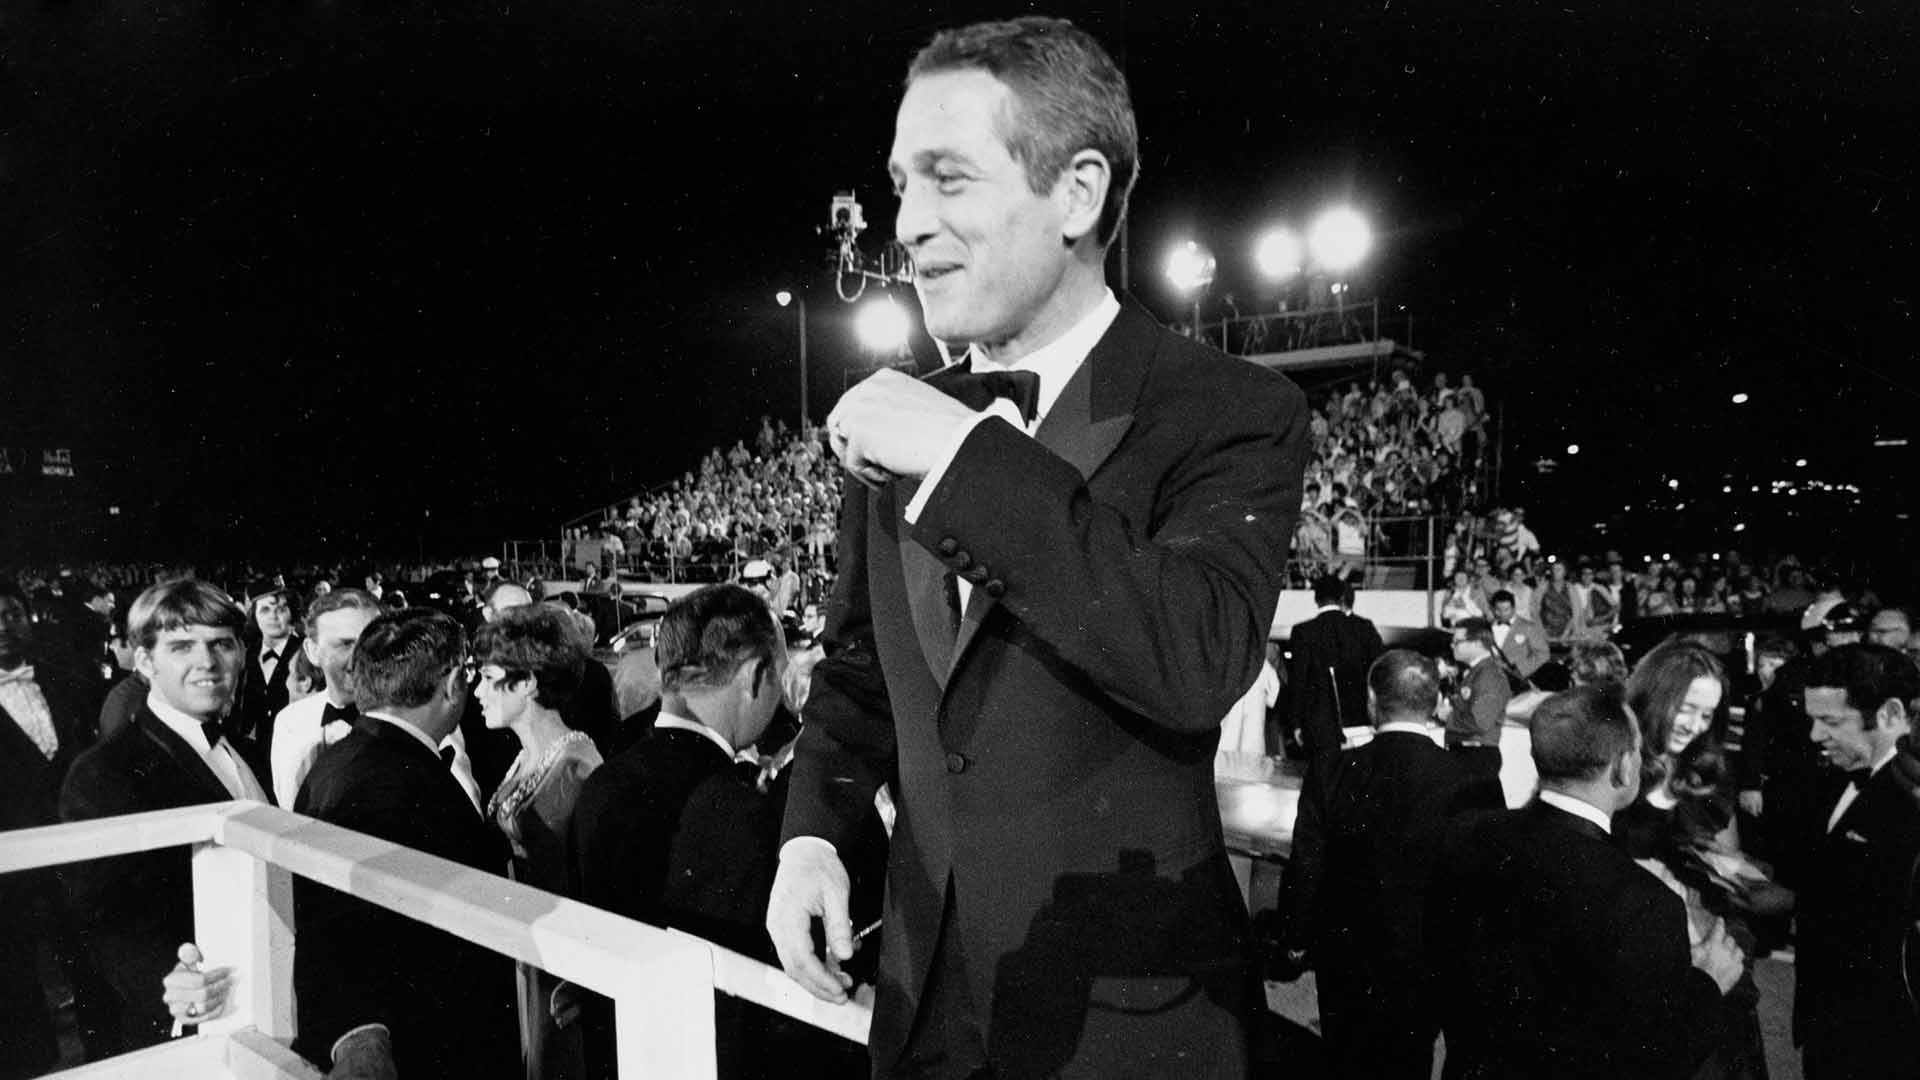 Newman during an award show